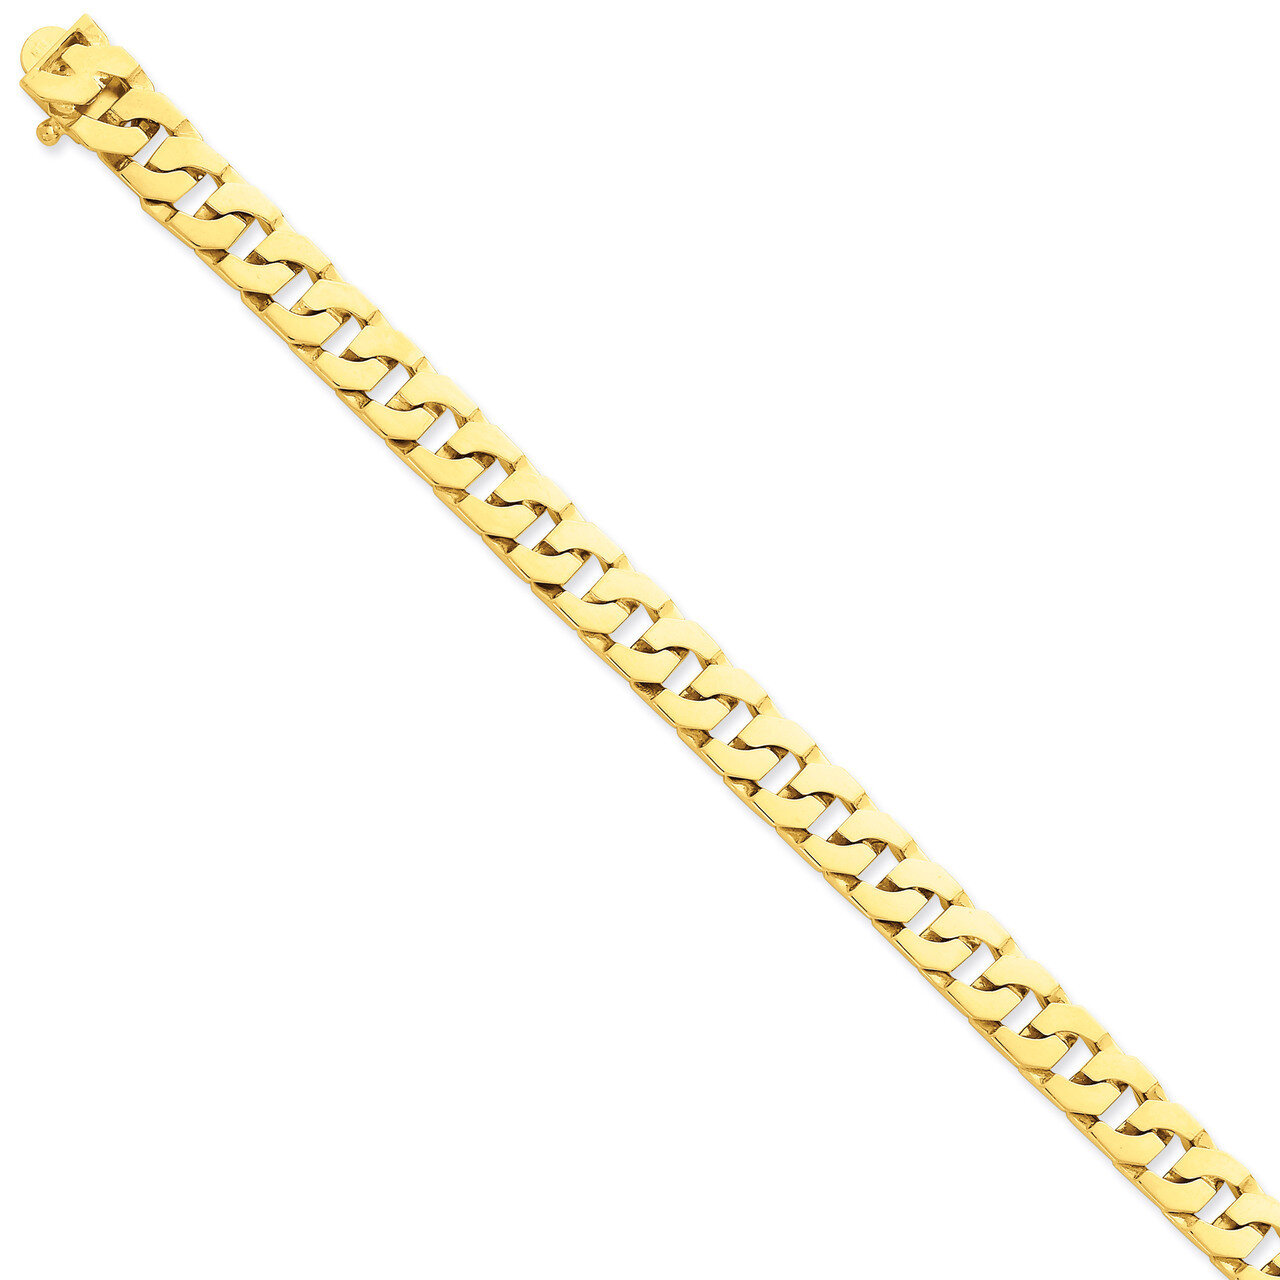 10mm Hand-Polished Fancy Link Chain 9 Inch 14k Gold LK138-9